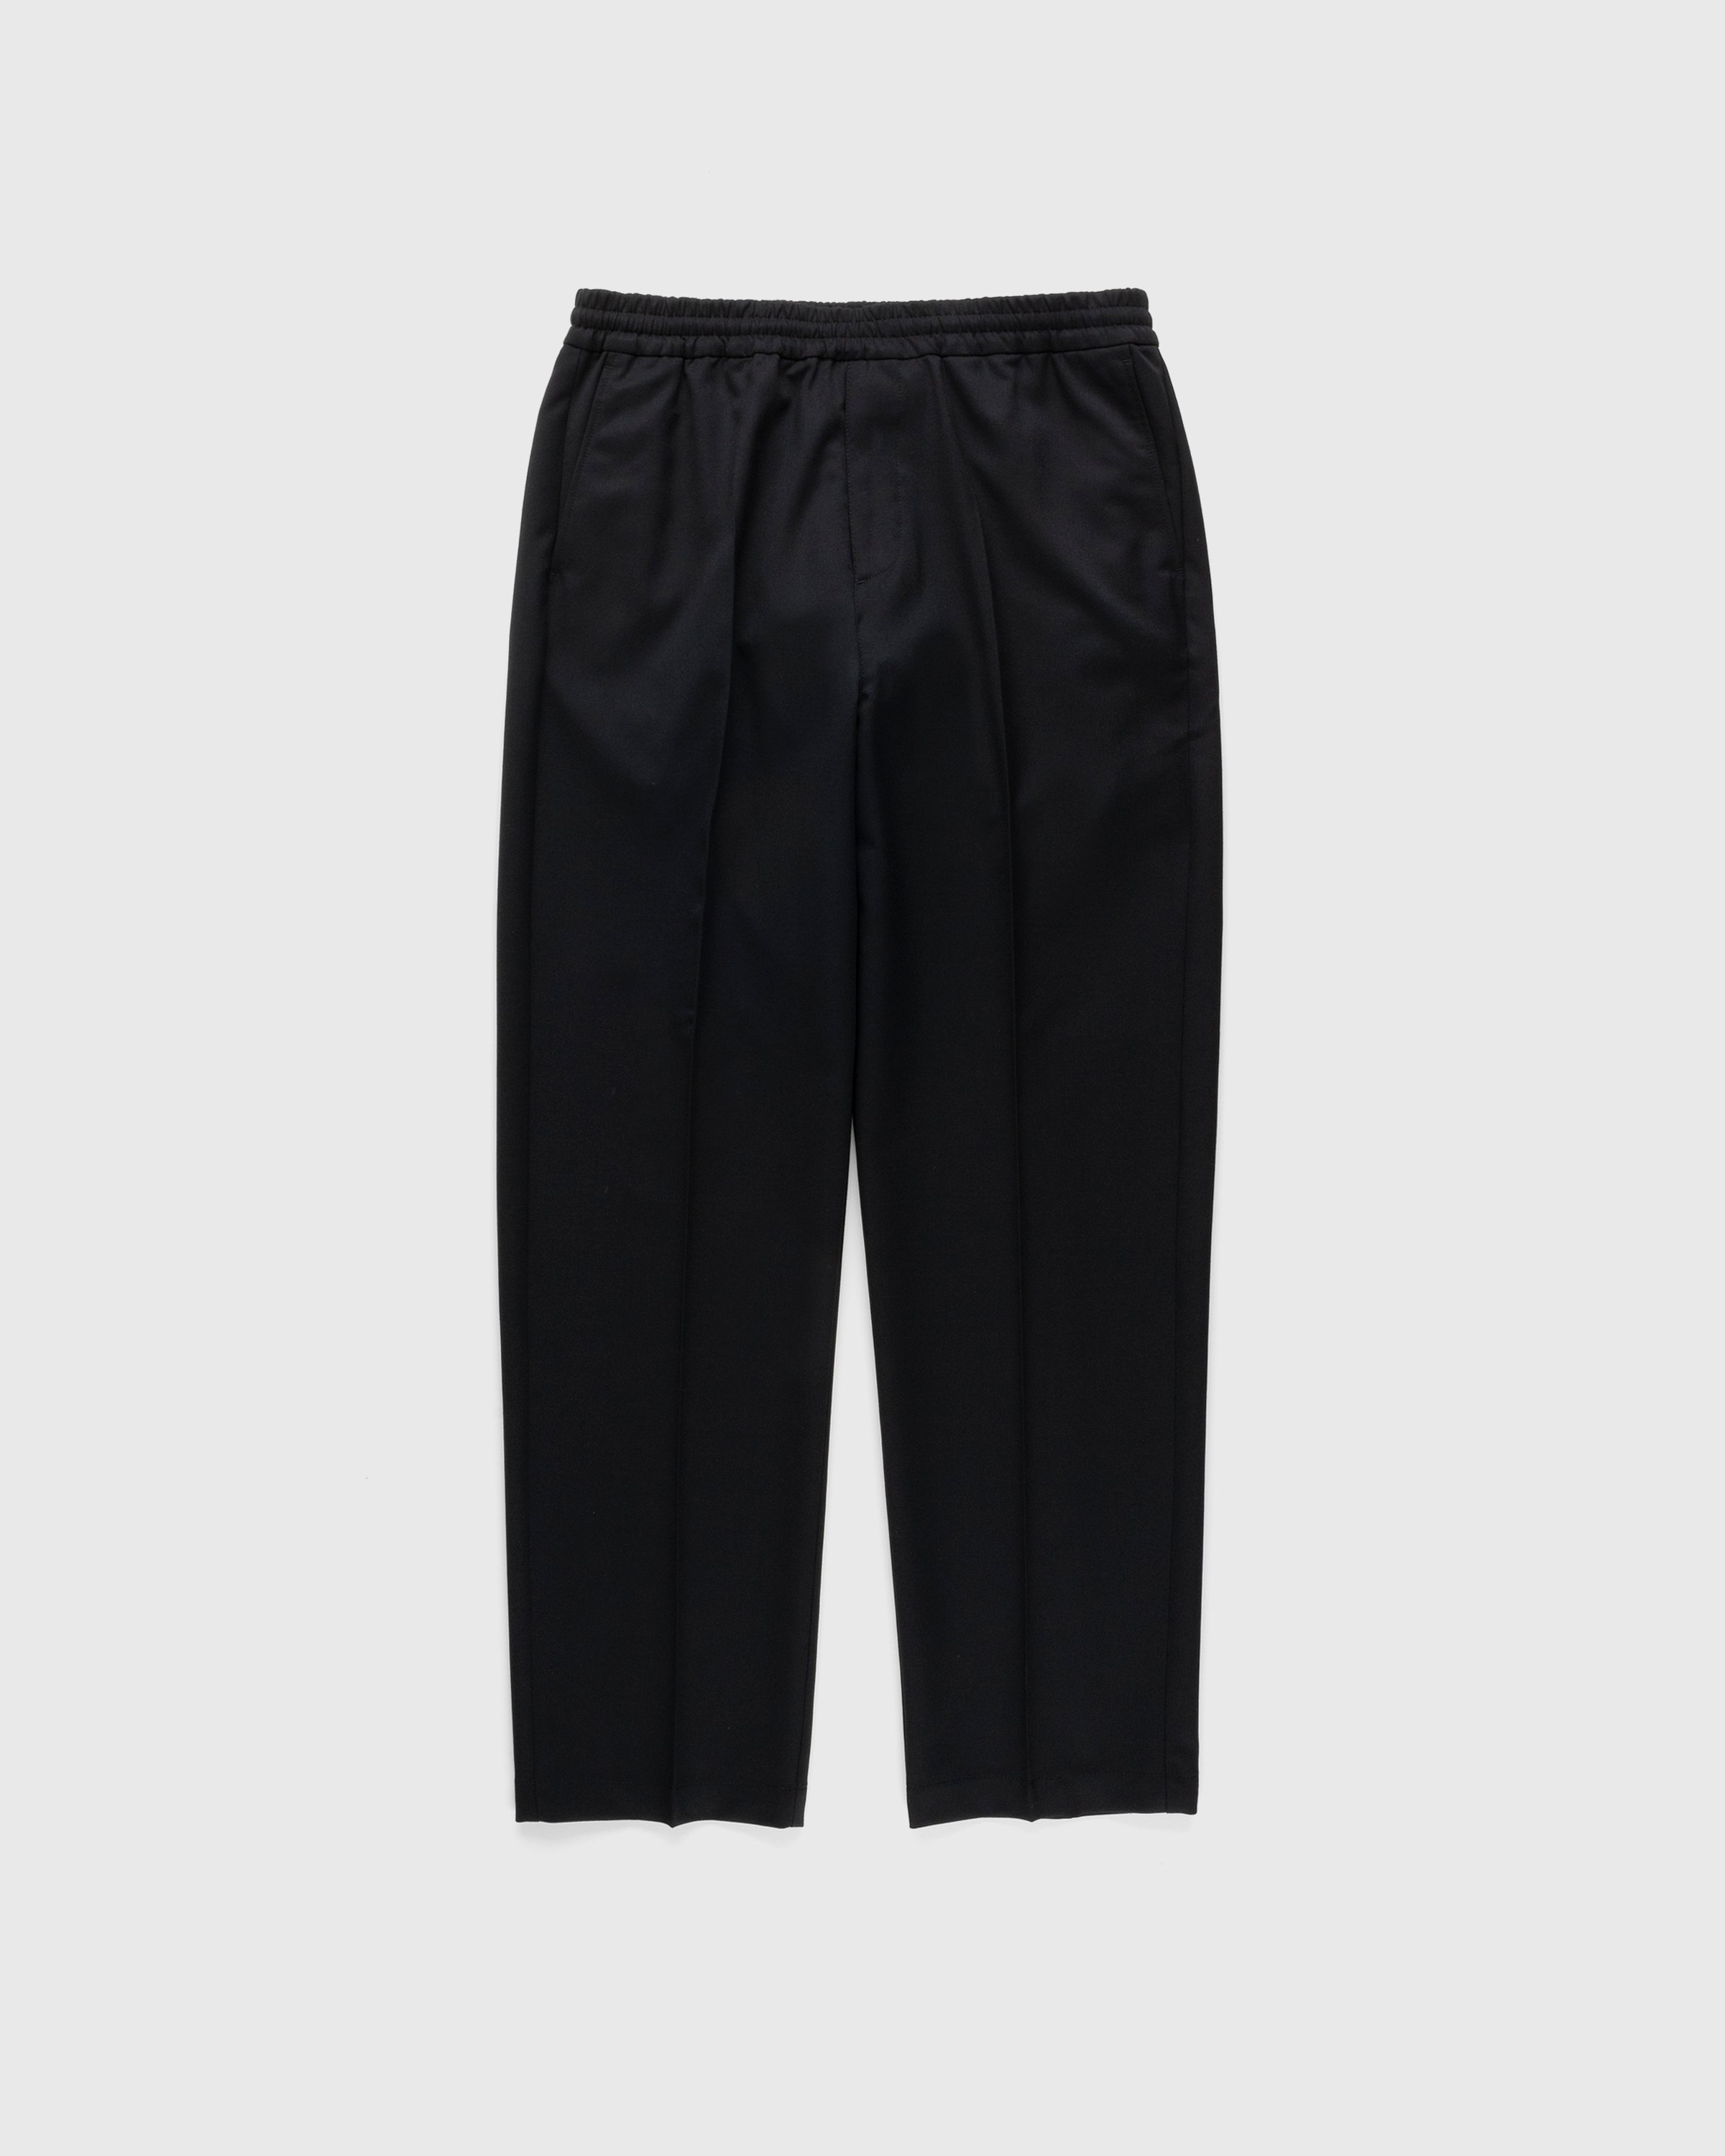 Highsnobiety - Wool Blend Elastic Pants Black - Clothing - Black - Image 1